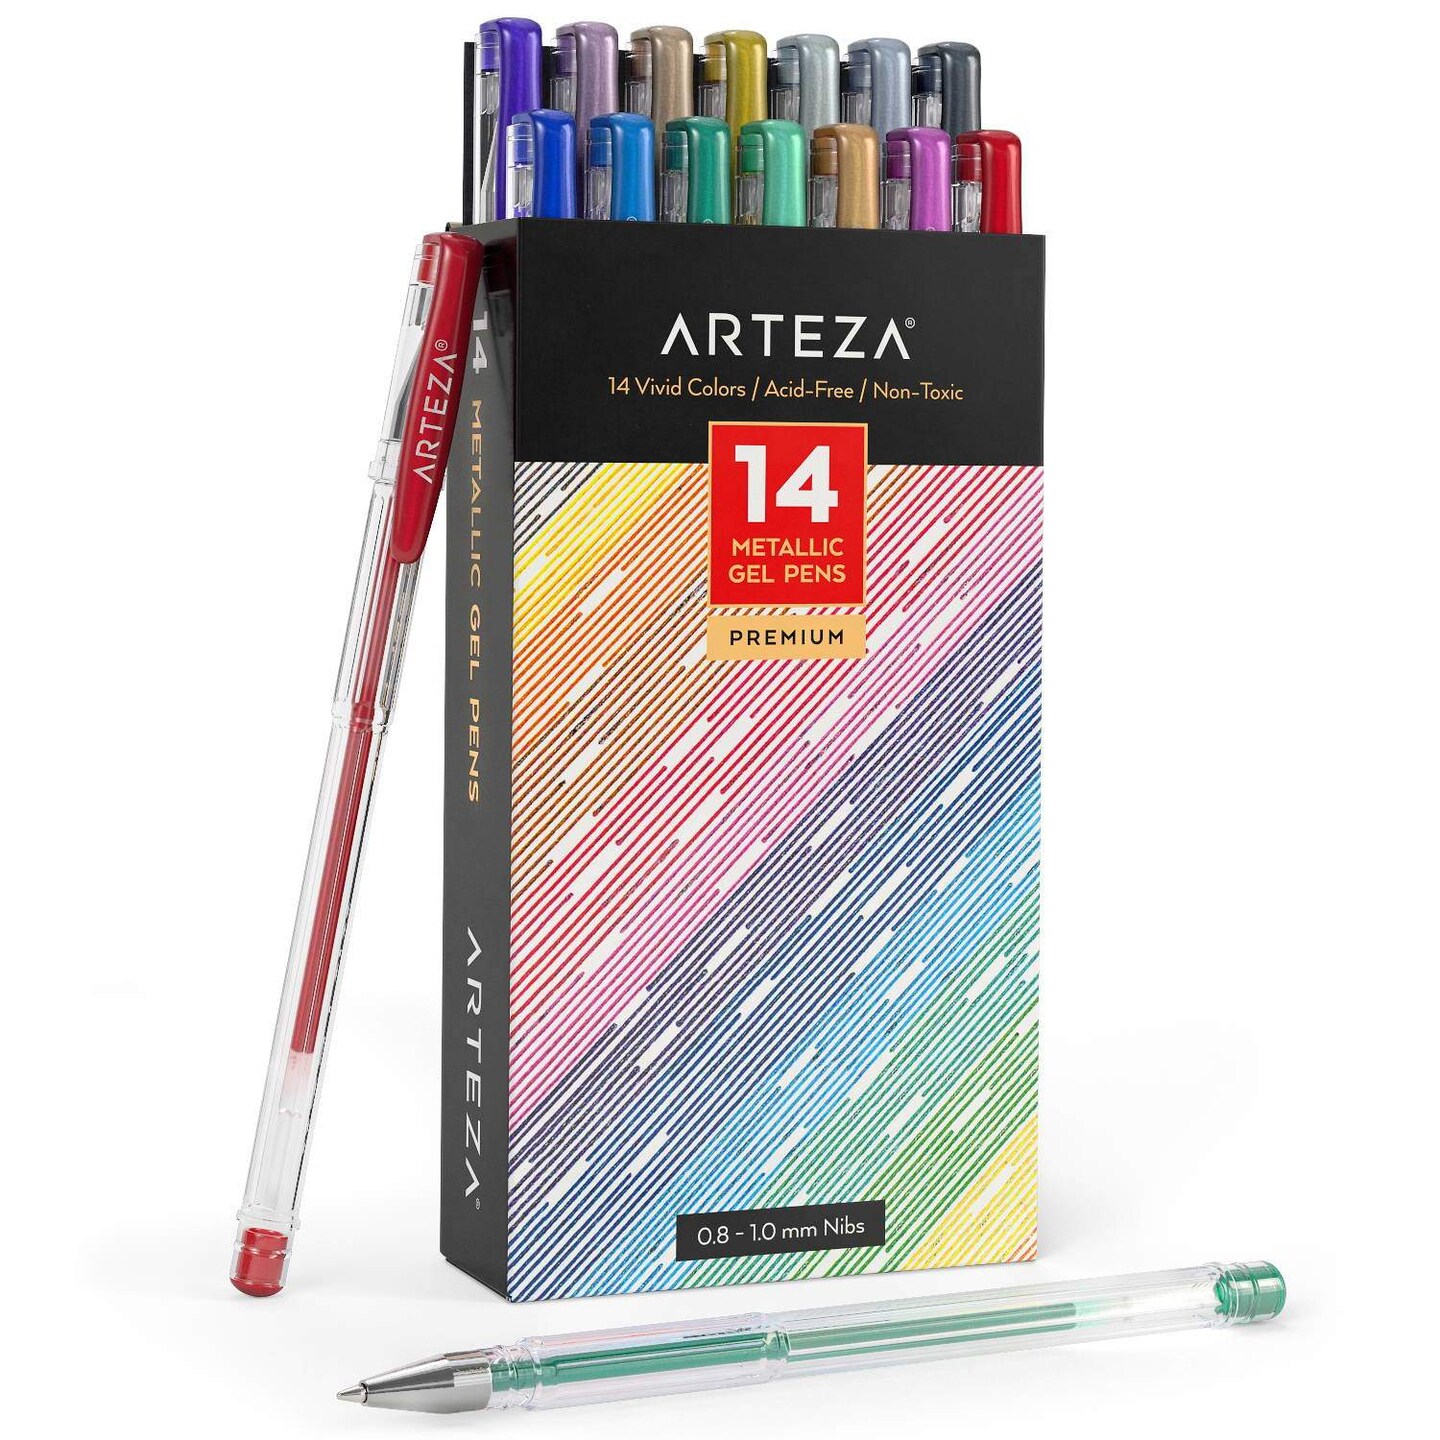  Yoobi Mini Gel Pens & Carrying Case, Neon, Metallic, Glitter  Shades, Multicolor Ink, 1.0mm Medium Tip